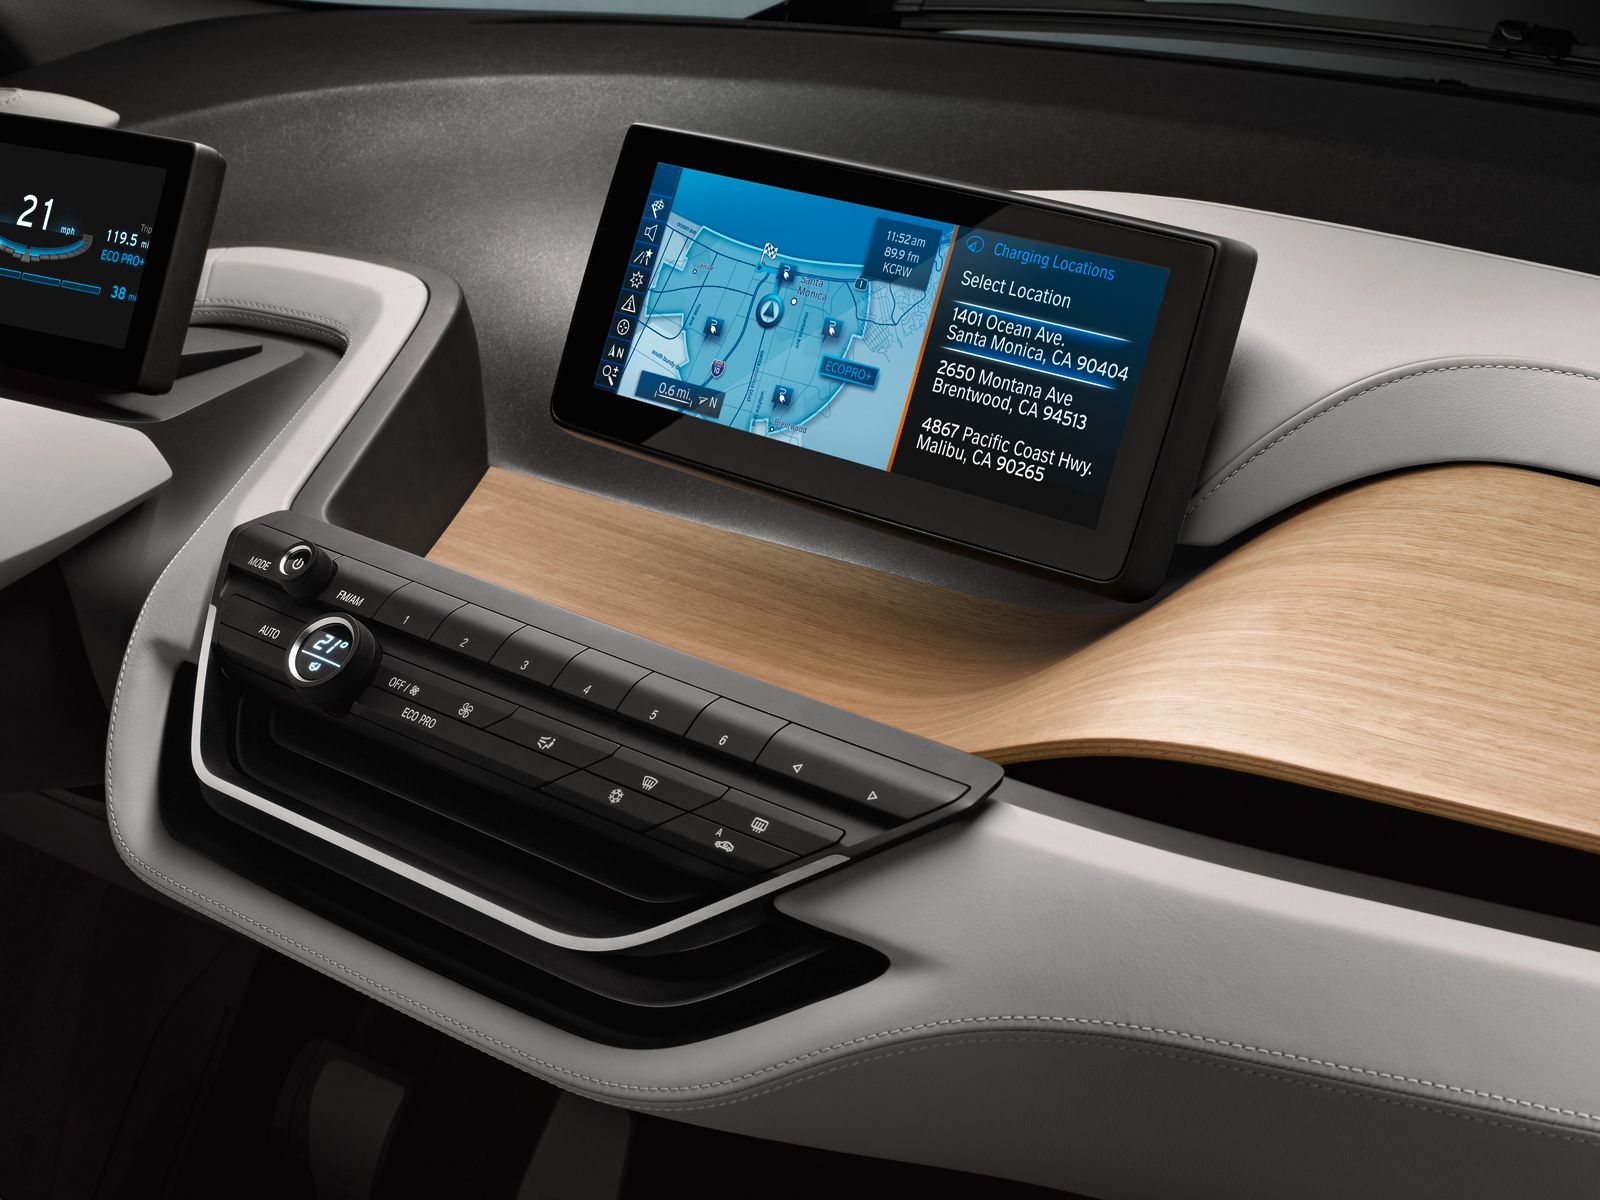 BMW I3 Concept Coupe Backgrounds, Compatible - PC, Mobile, Gadgets| 1600x1200 px